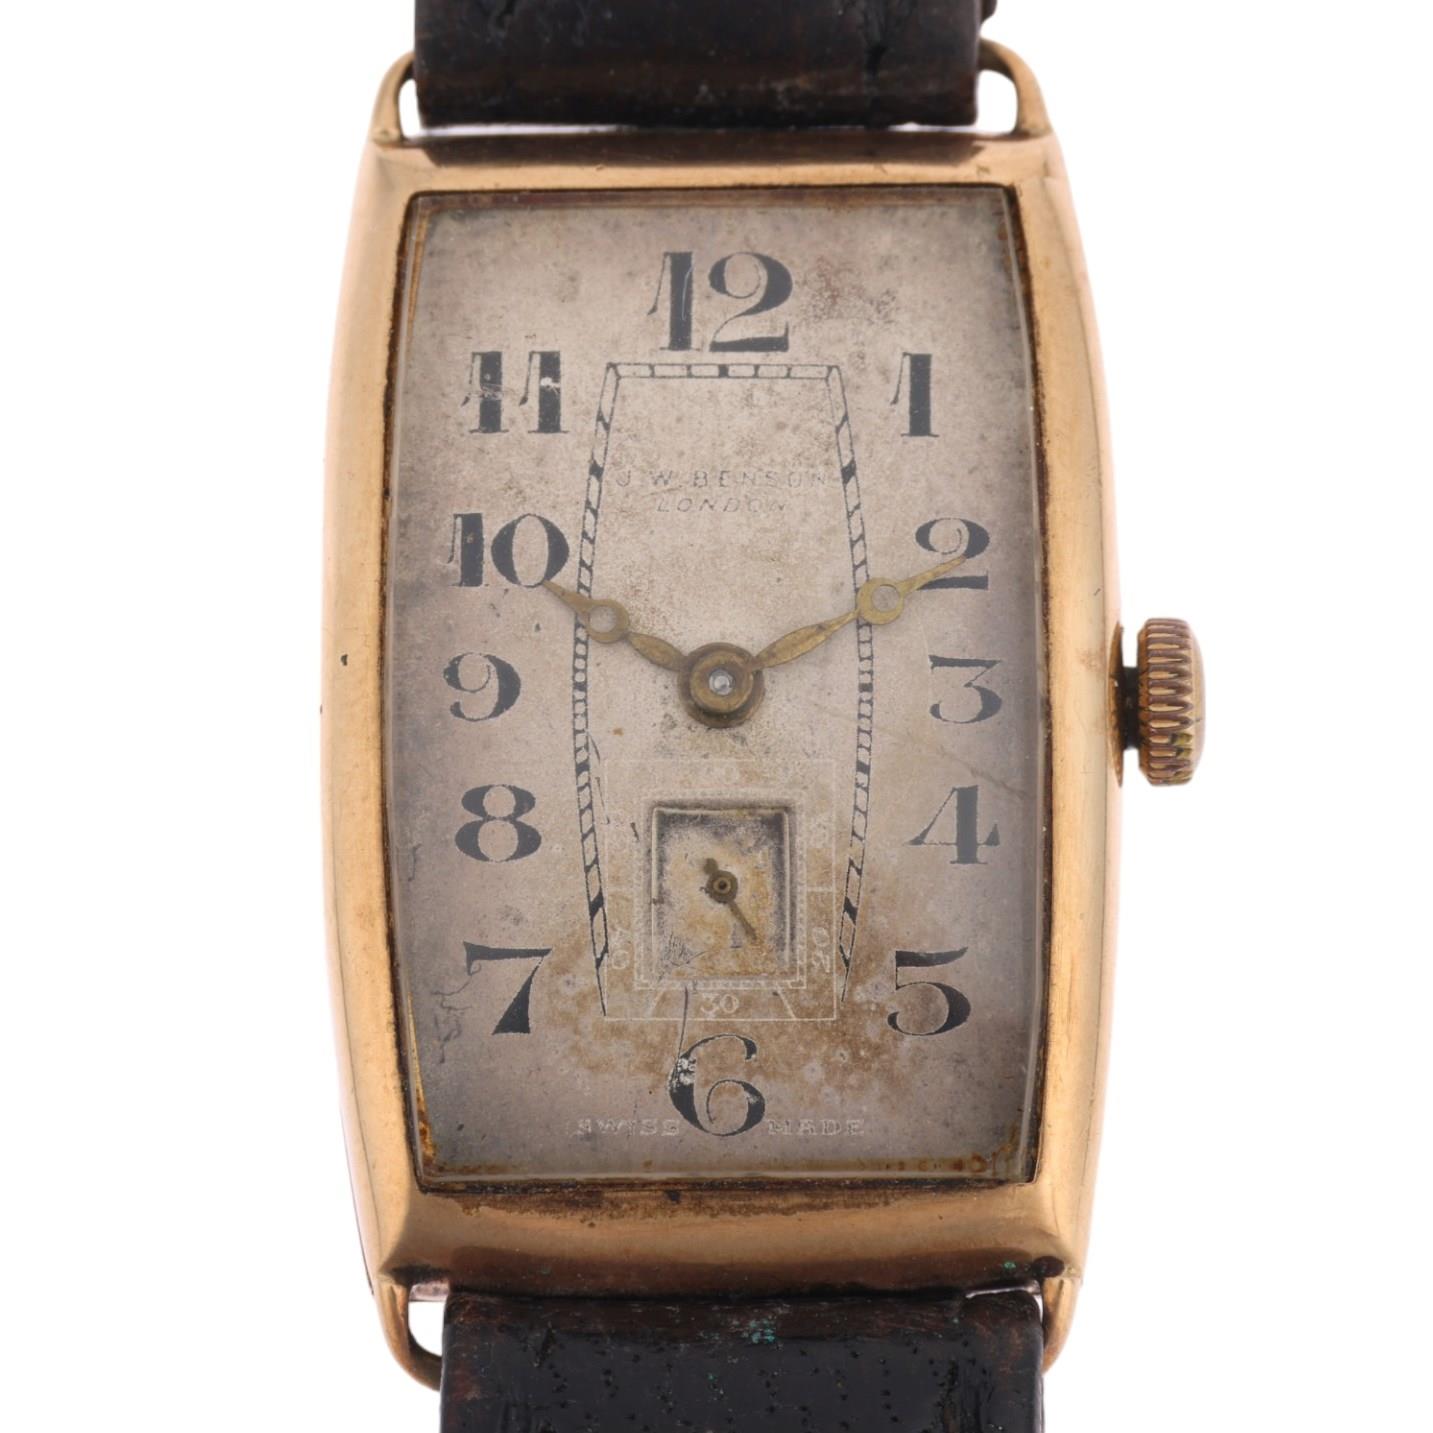 J W BENSON - an Art Deco 9ct gold mechanical wristwatch, circa 1930s, silvered dial with Arabic